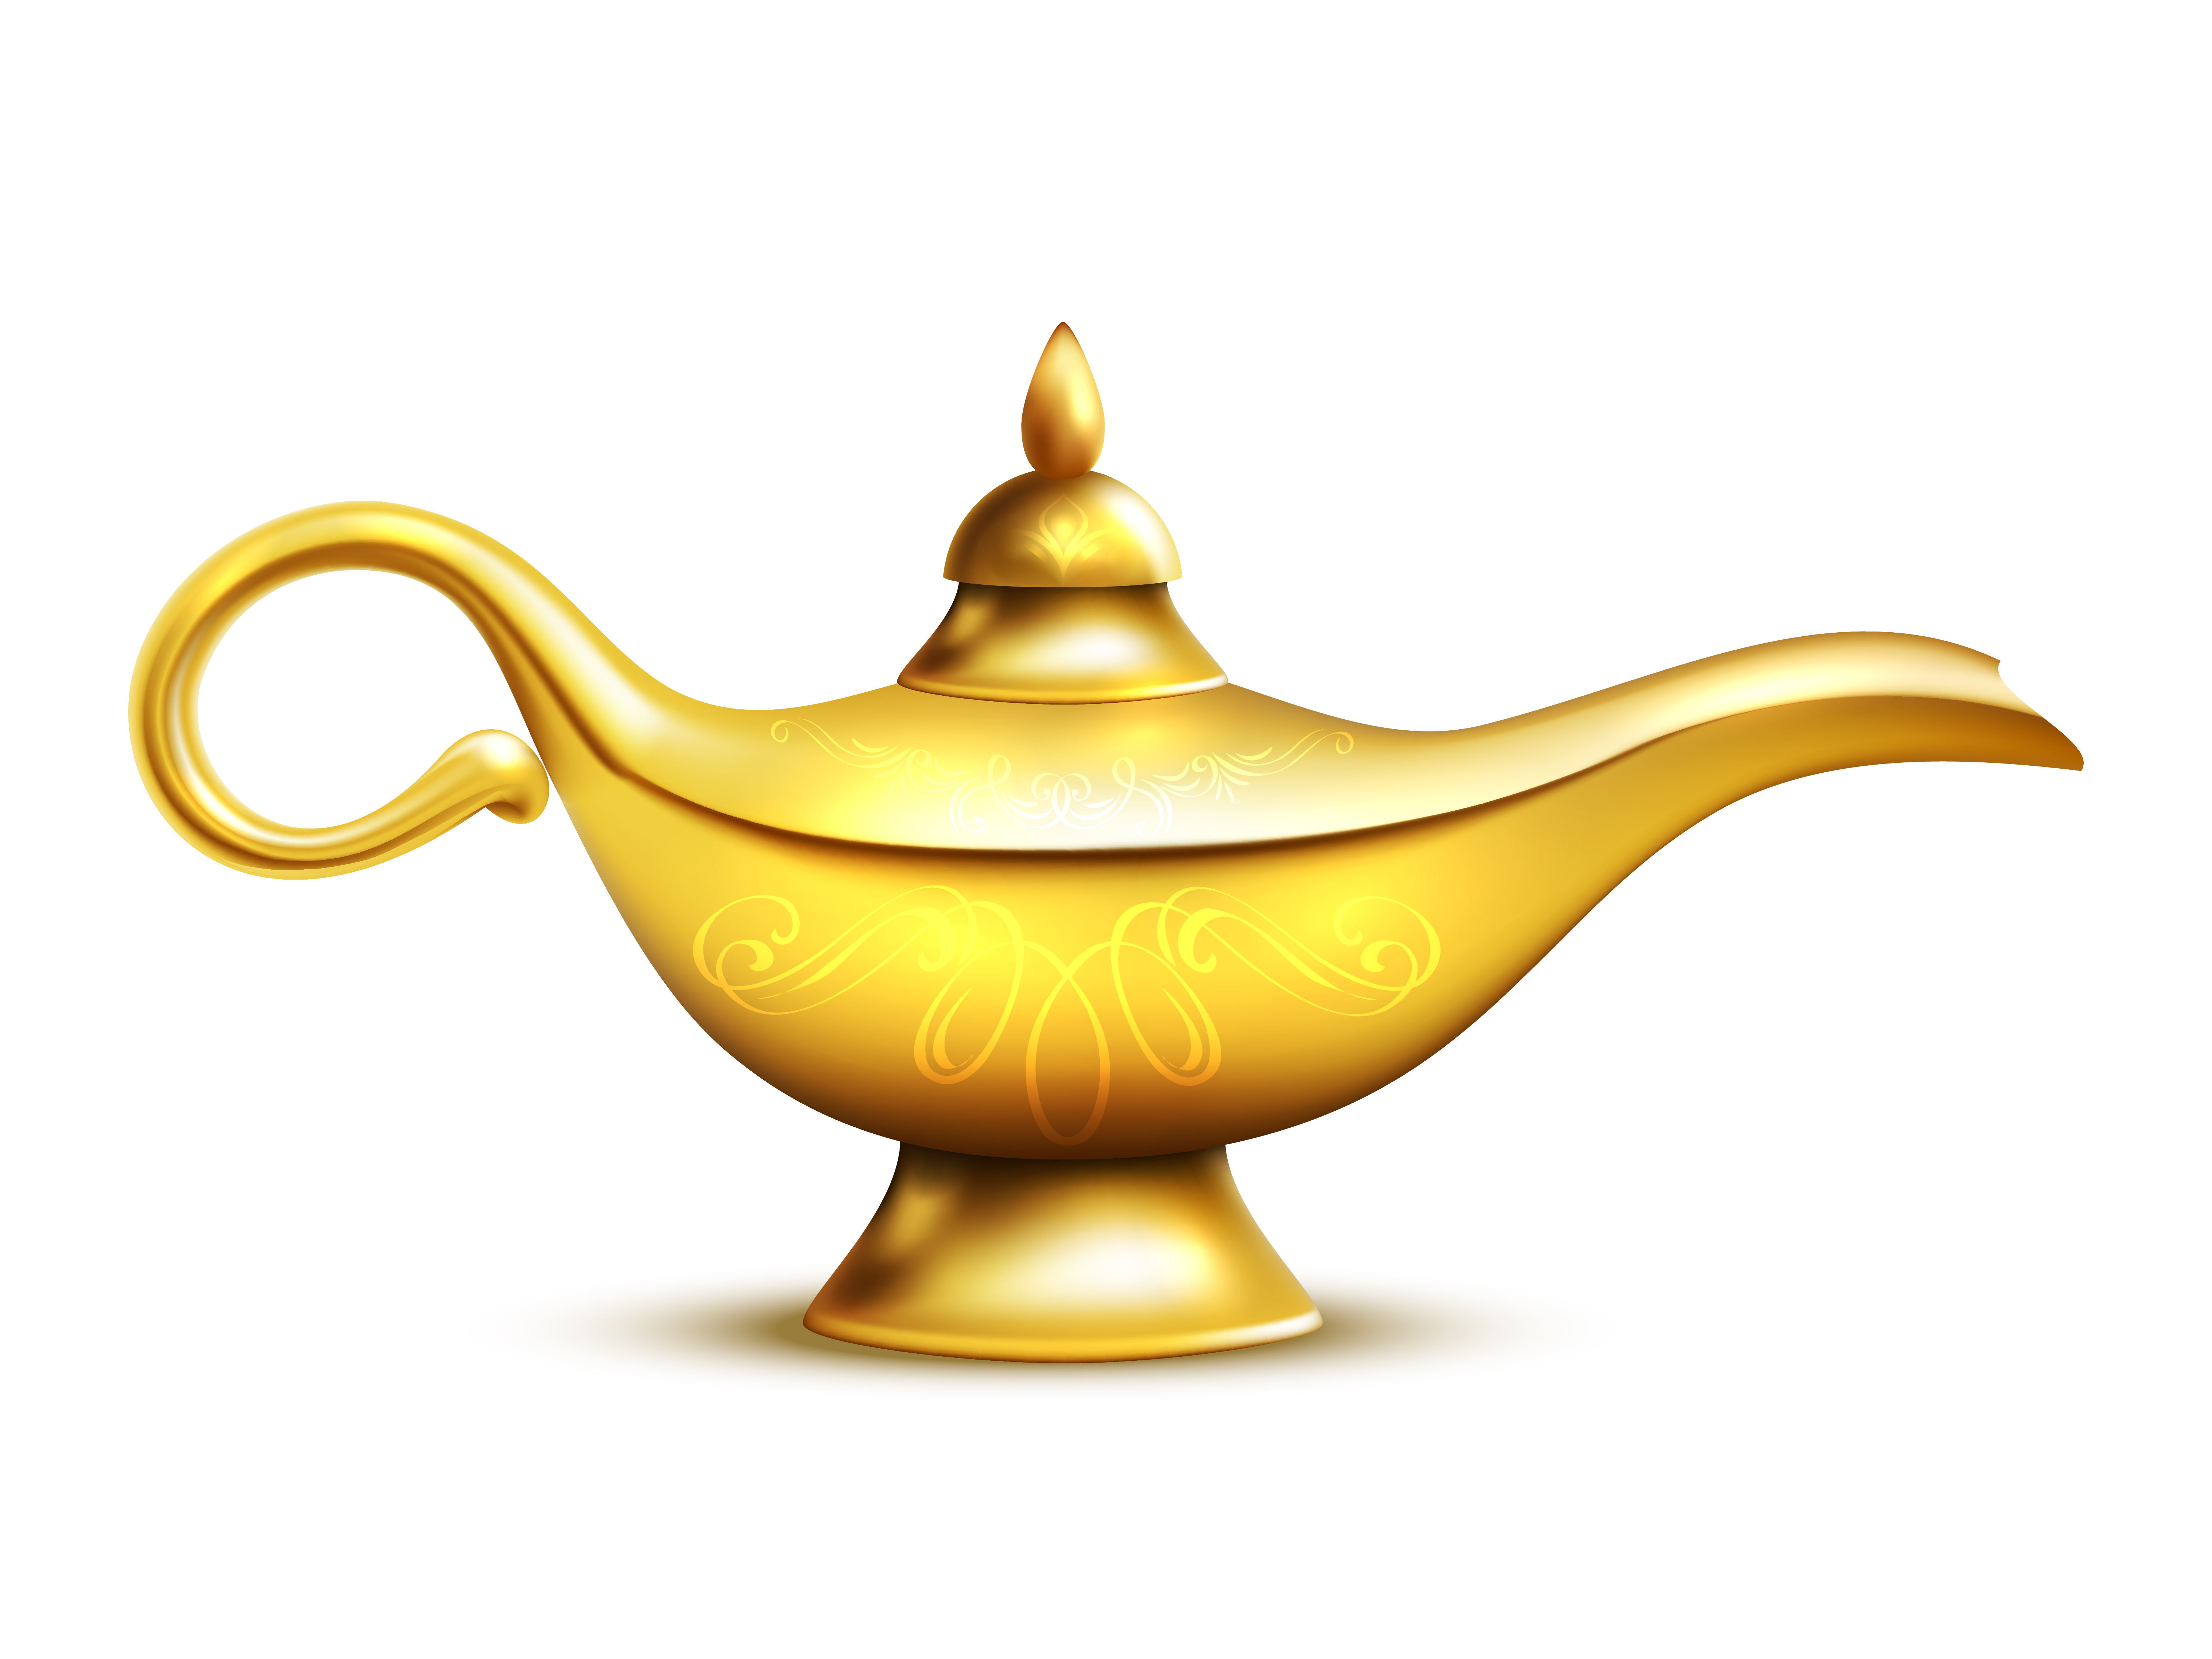 Aladdin Lamp Isolated Icon - Download Free Vectors ...